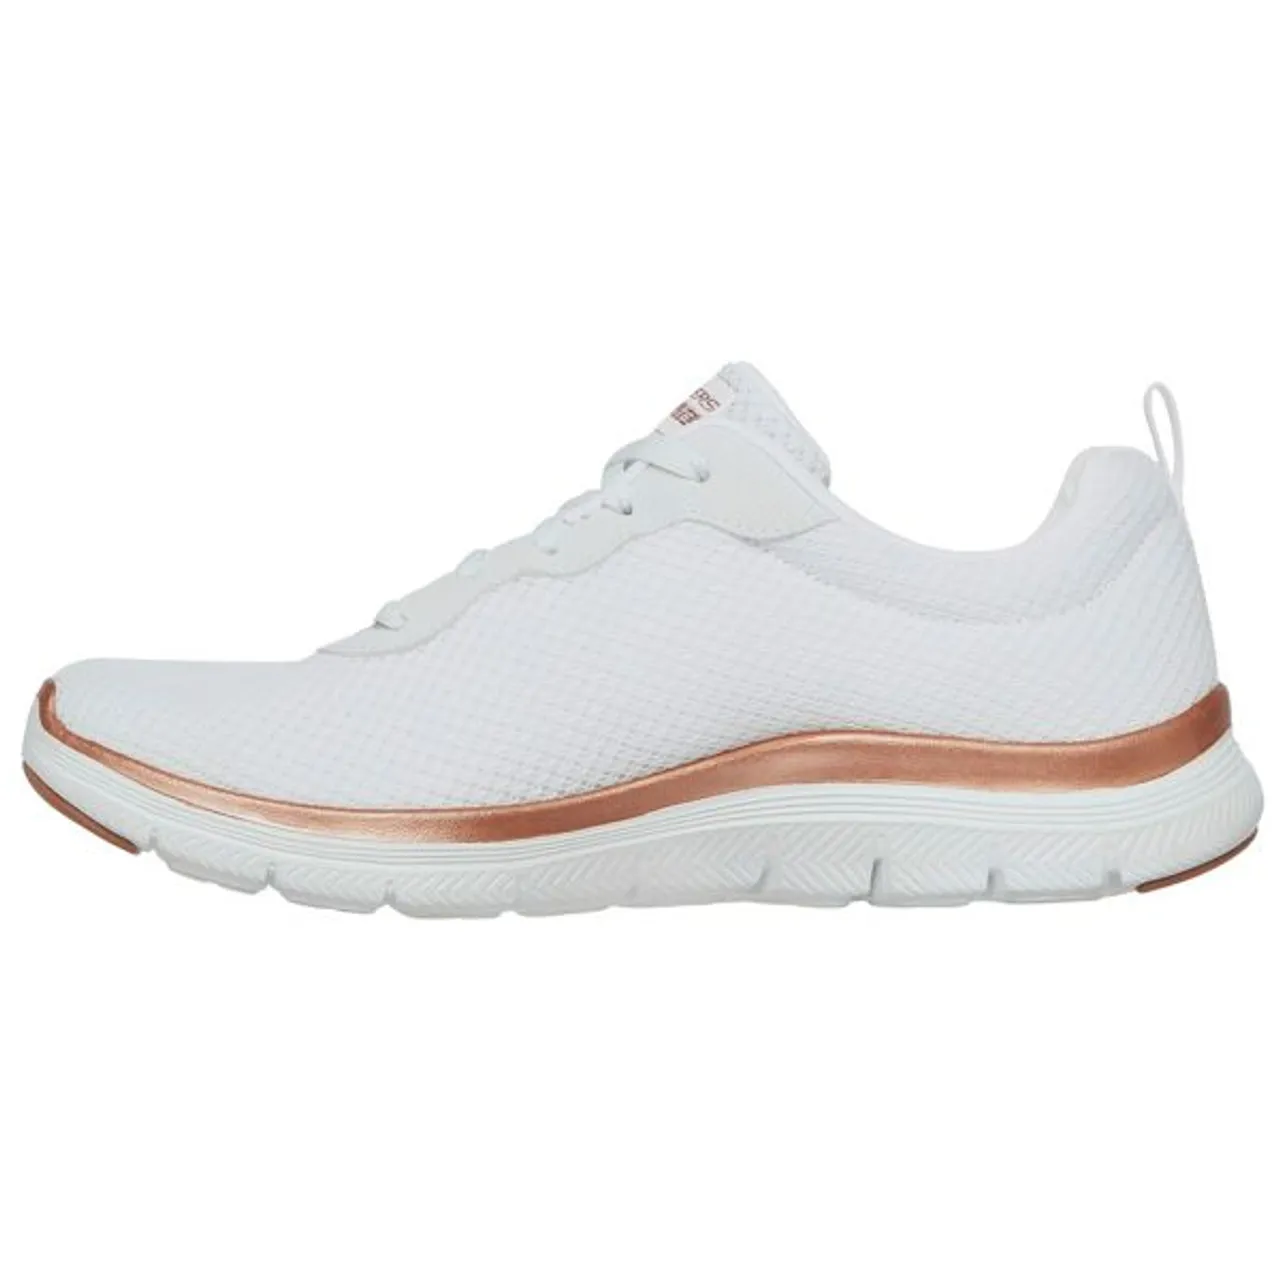 Sneaker SKECHERS "FLEX APPEAL 4.0 BRILLINAT VIEW" Gr. 35, rosegold (weiß, roségoldfarben) Damen Schuhe Sneaker